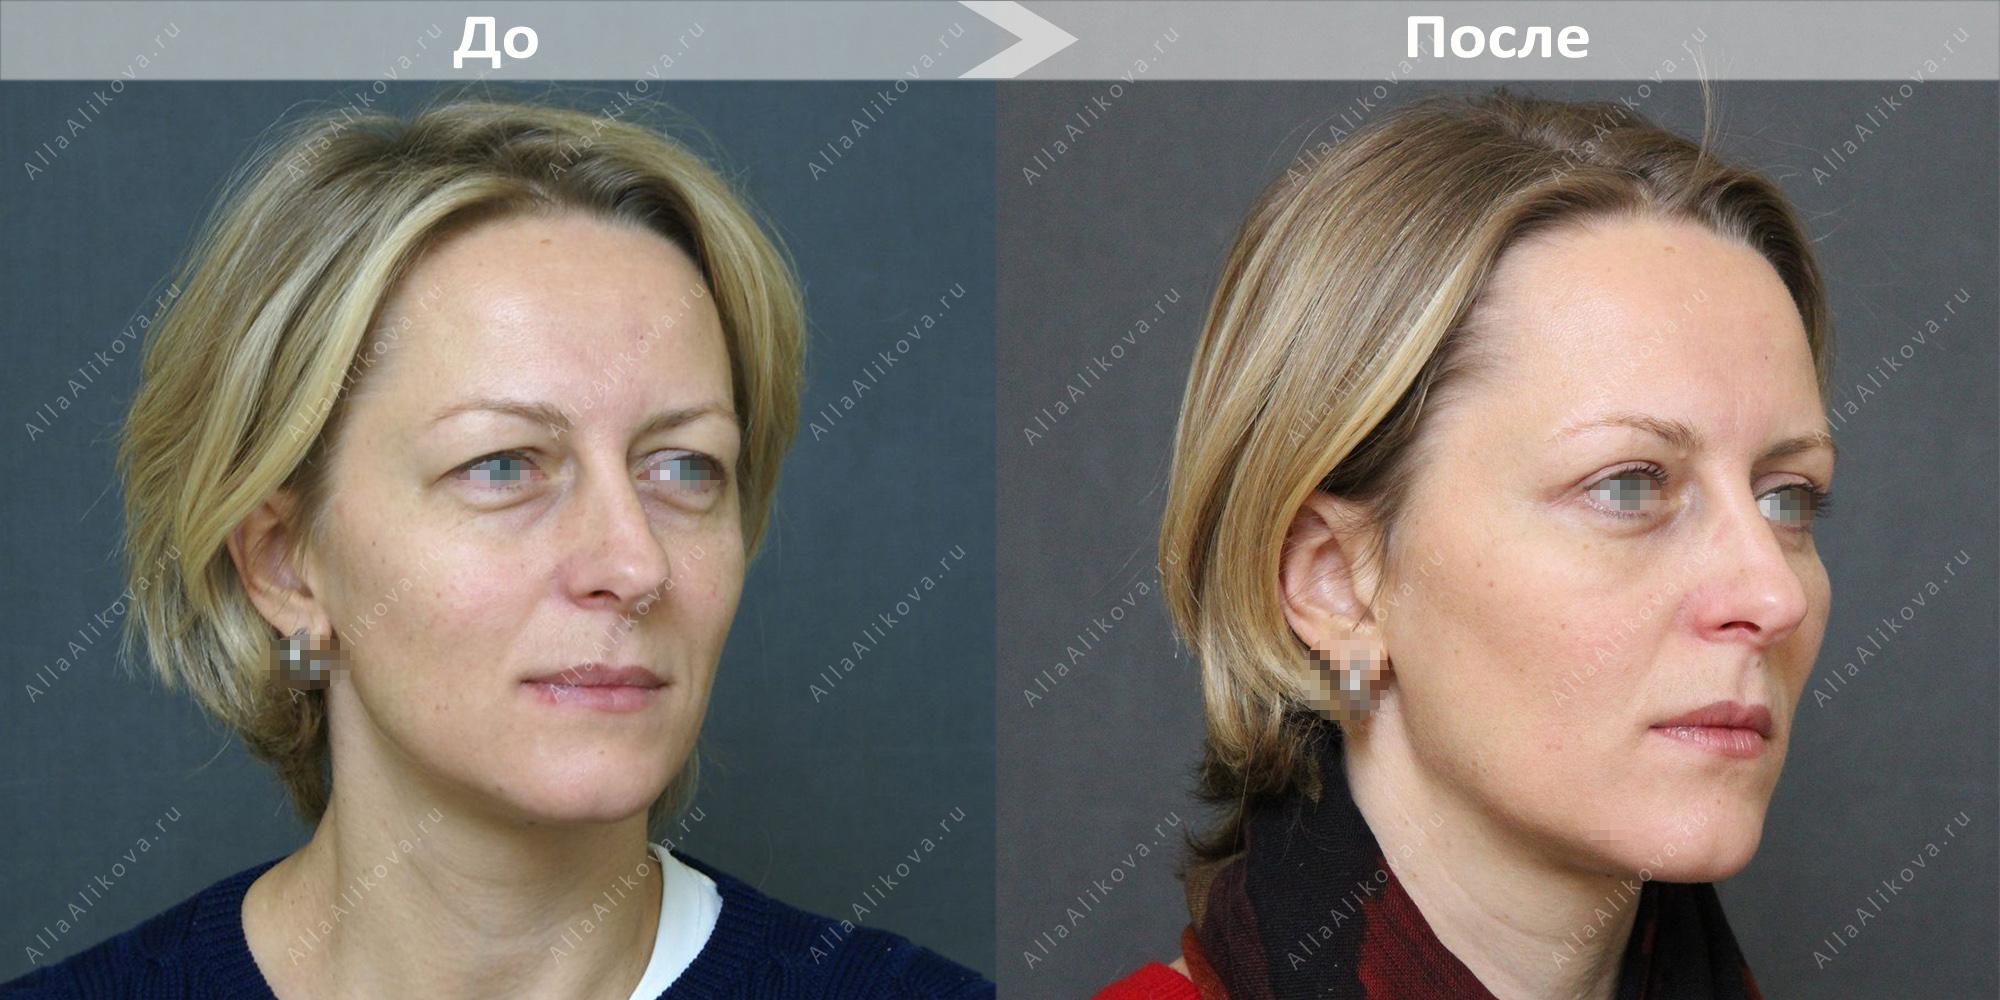 Яковлева до и после блефаропластики